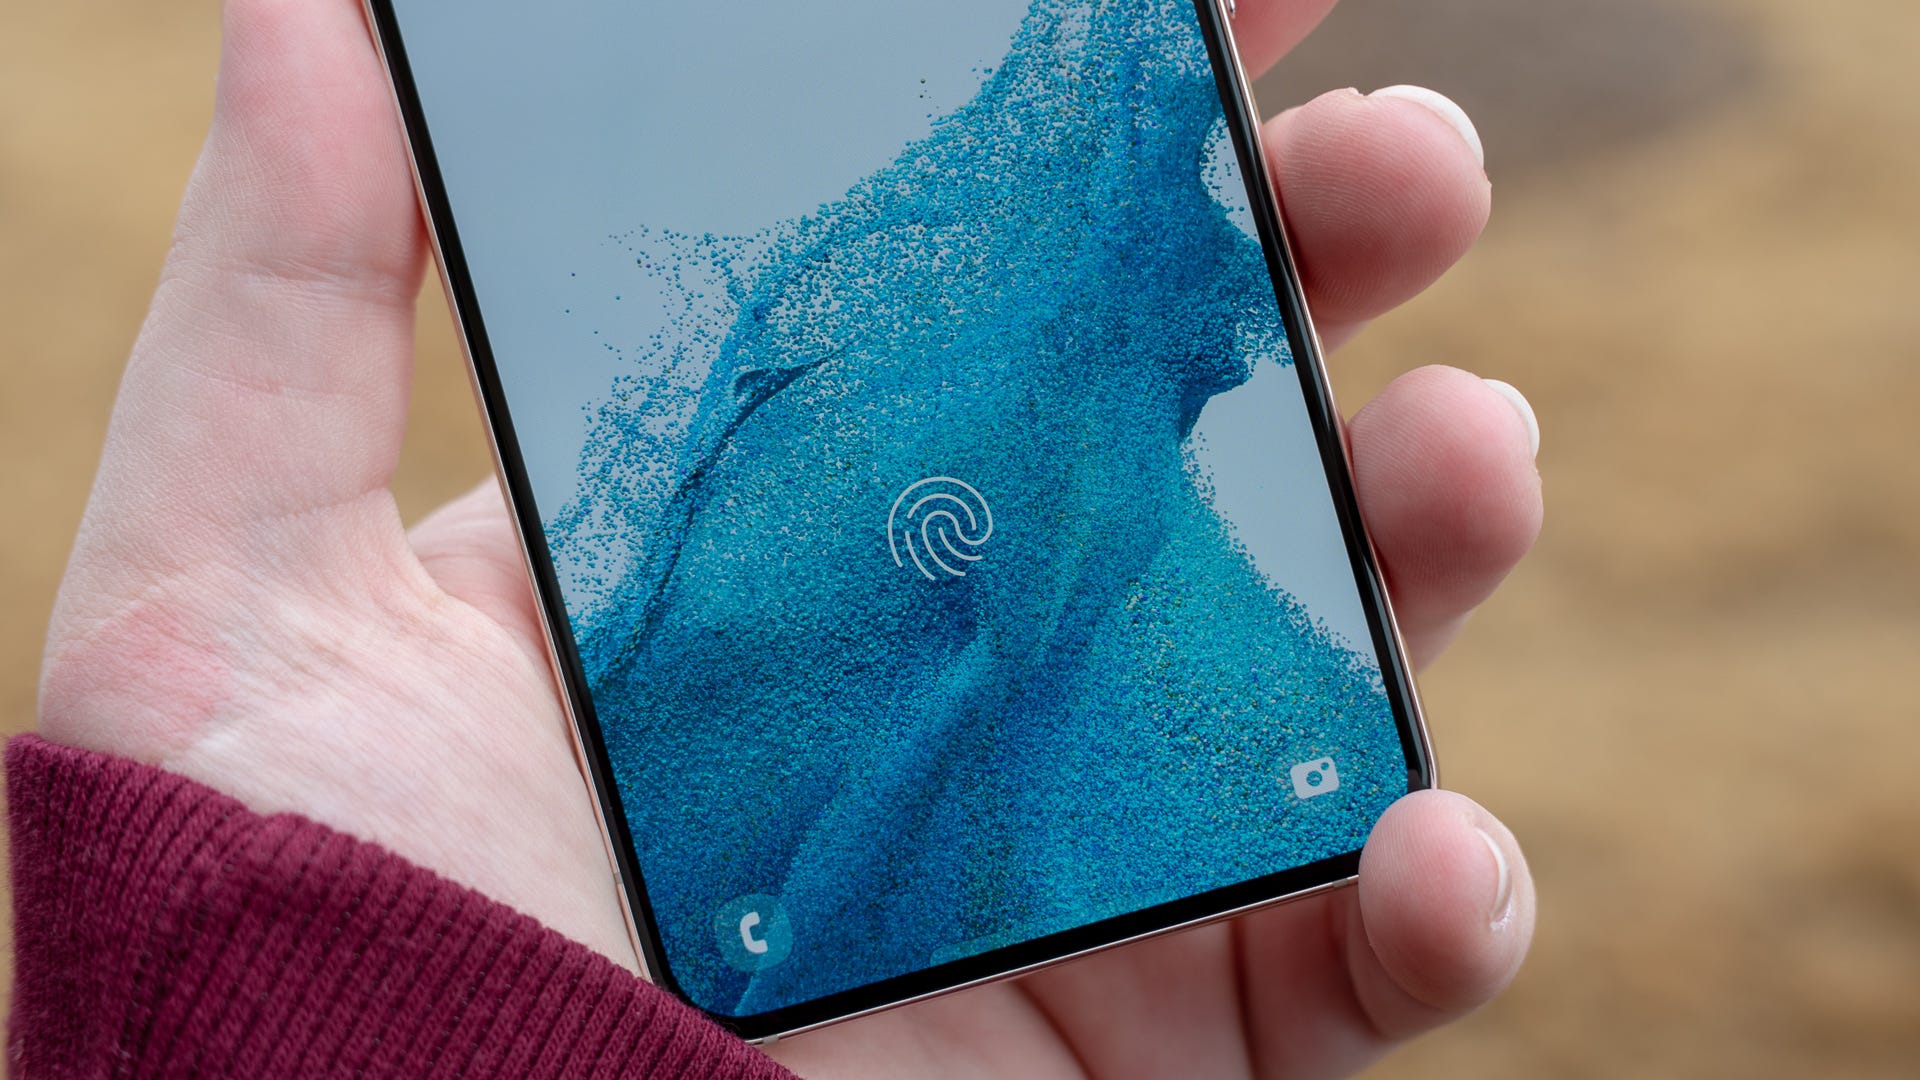 Phones With In-Display Fingerprint Scanners